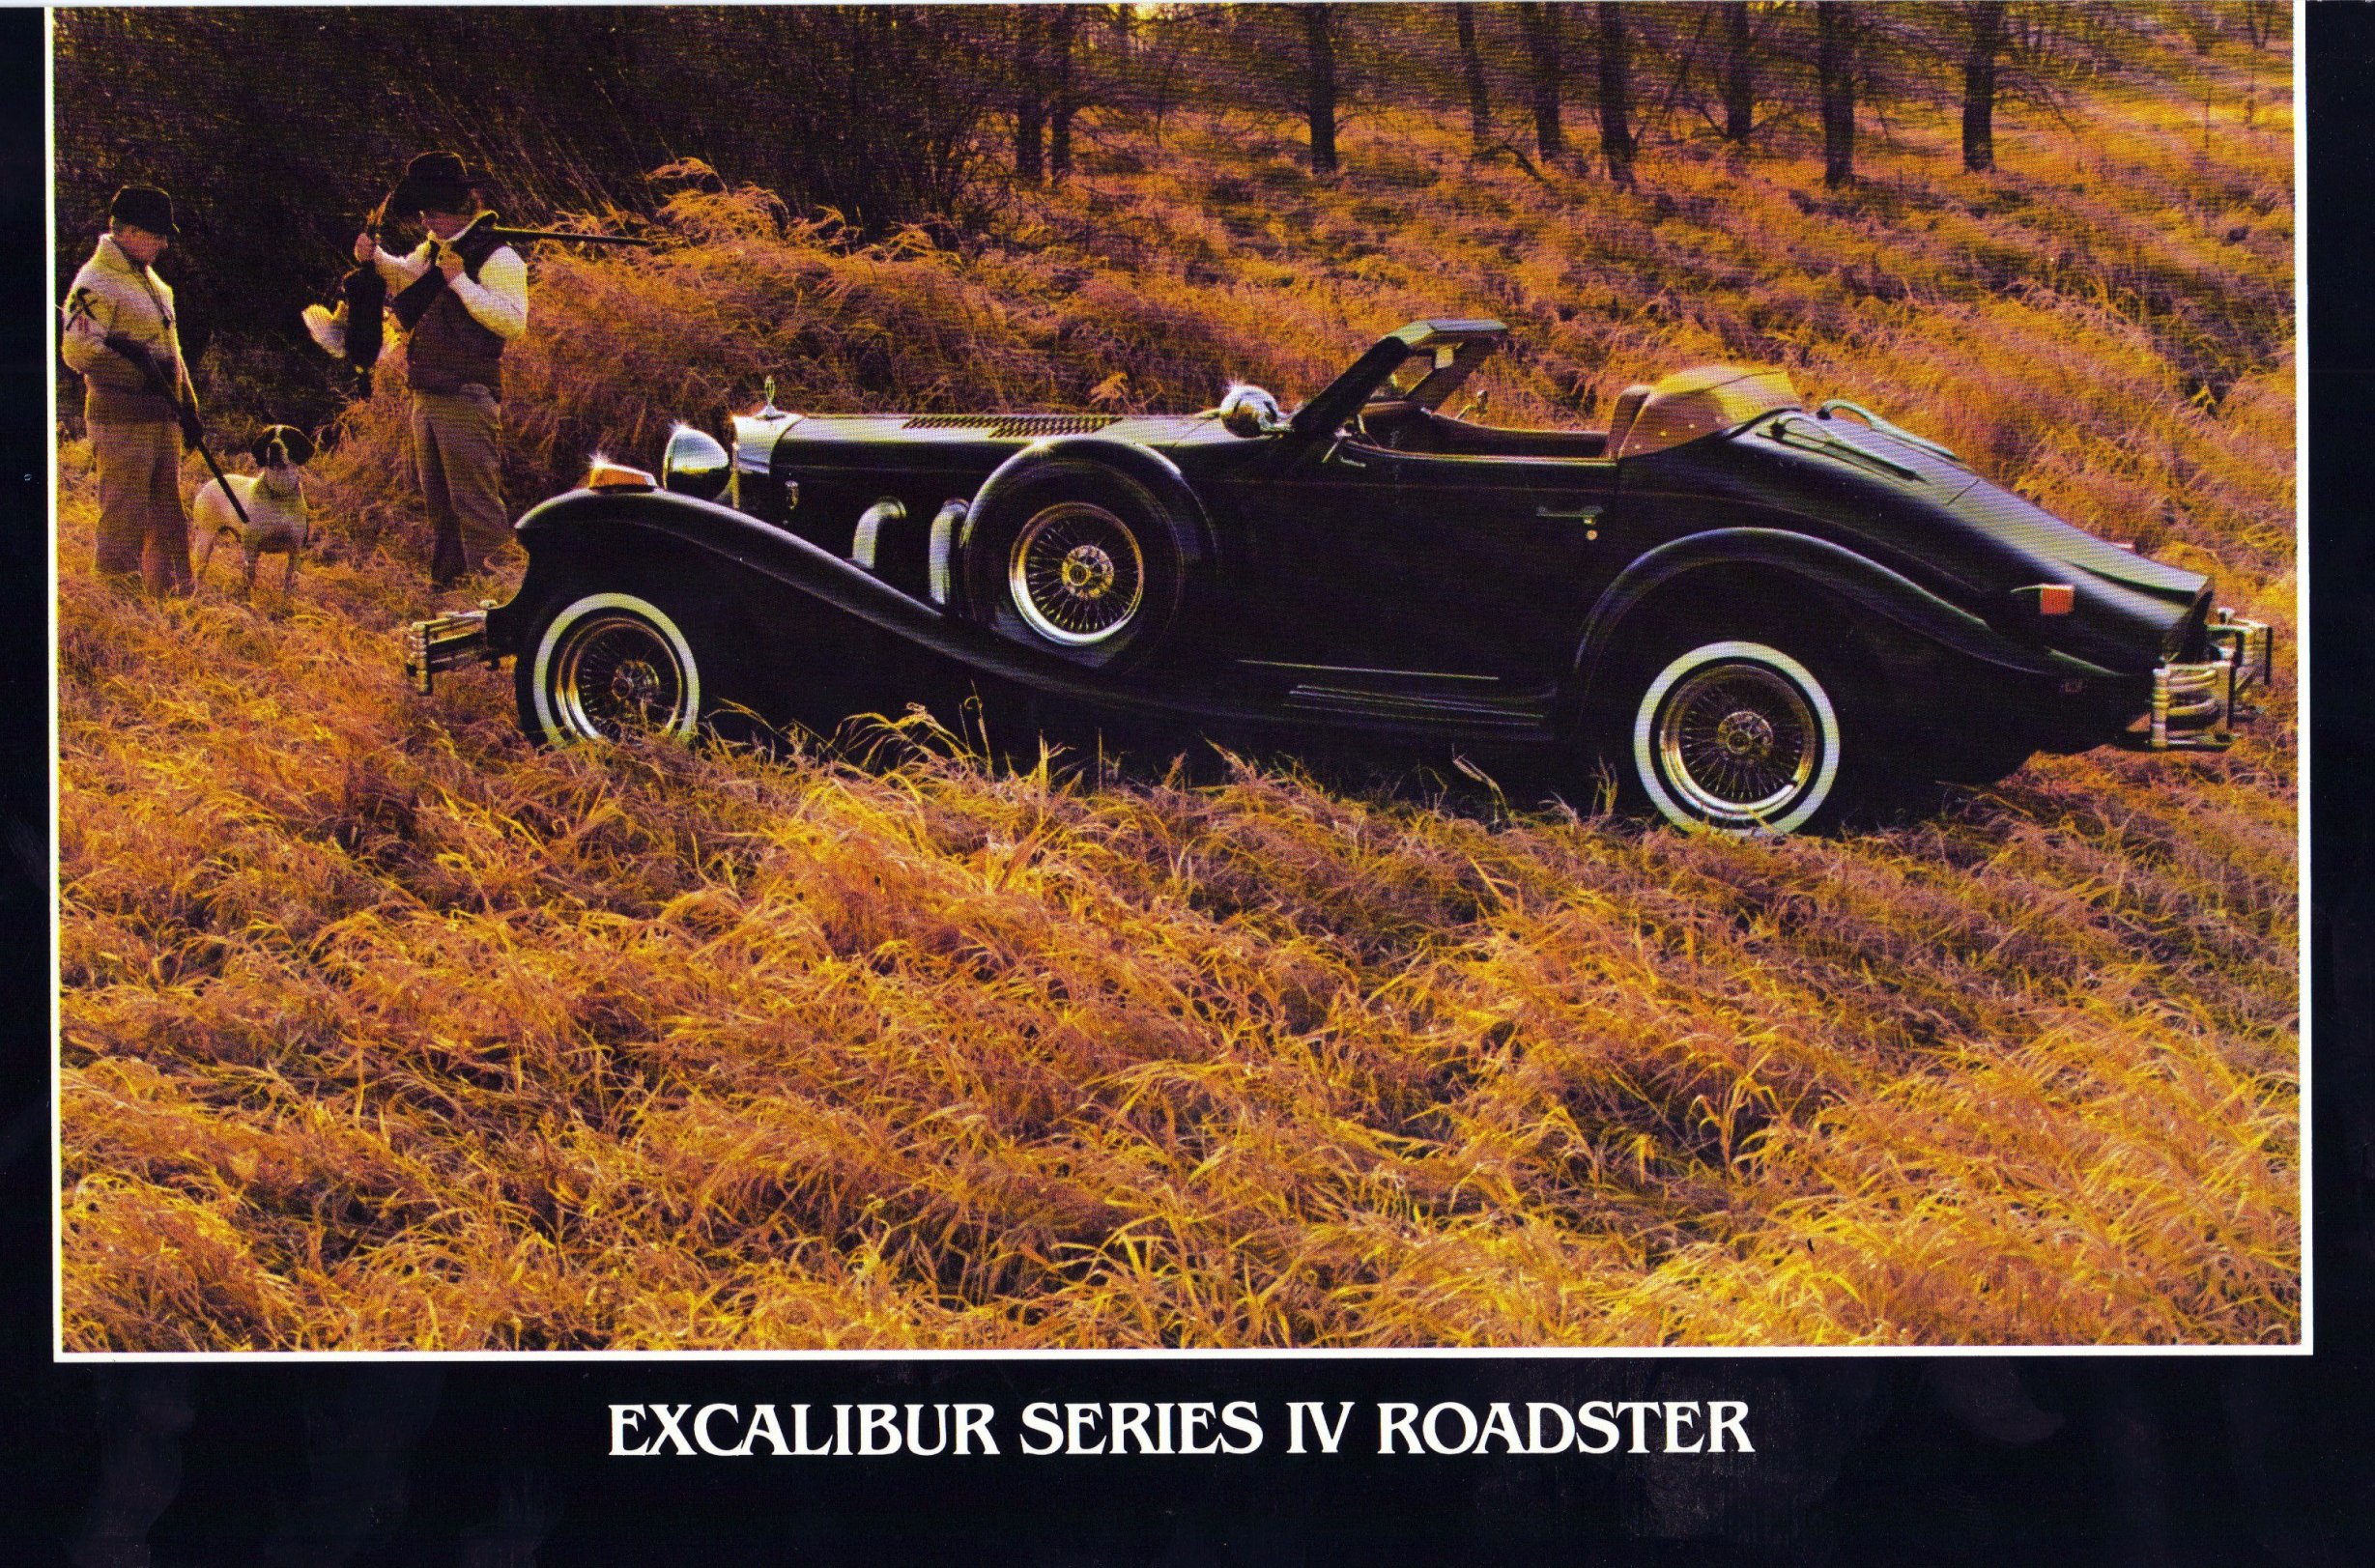 1981 Excalibur Series IV Roadster | Flickr - Photo Sharing!